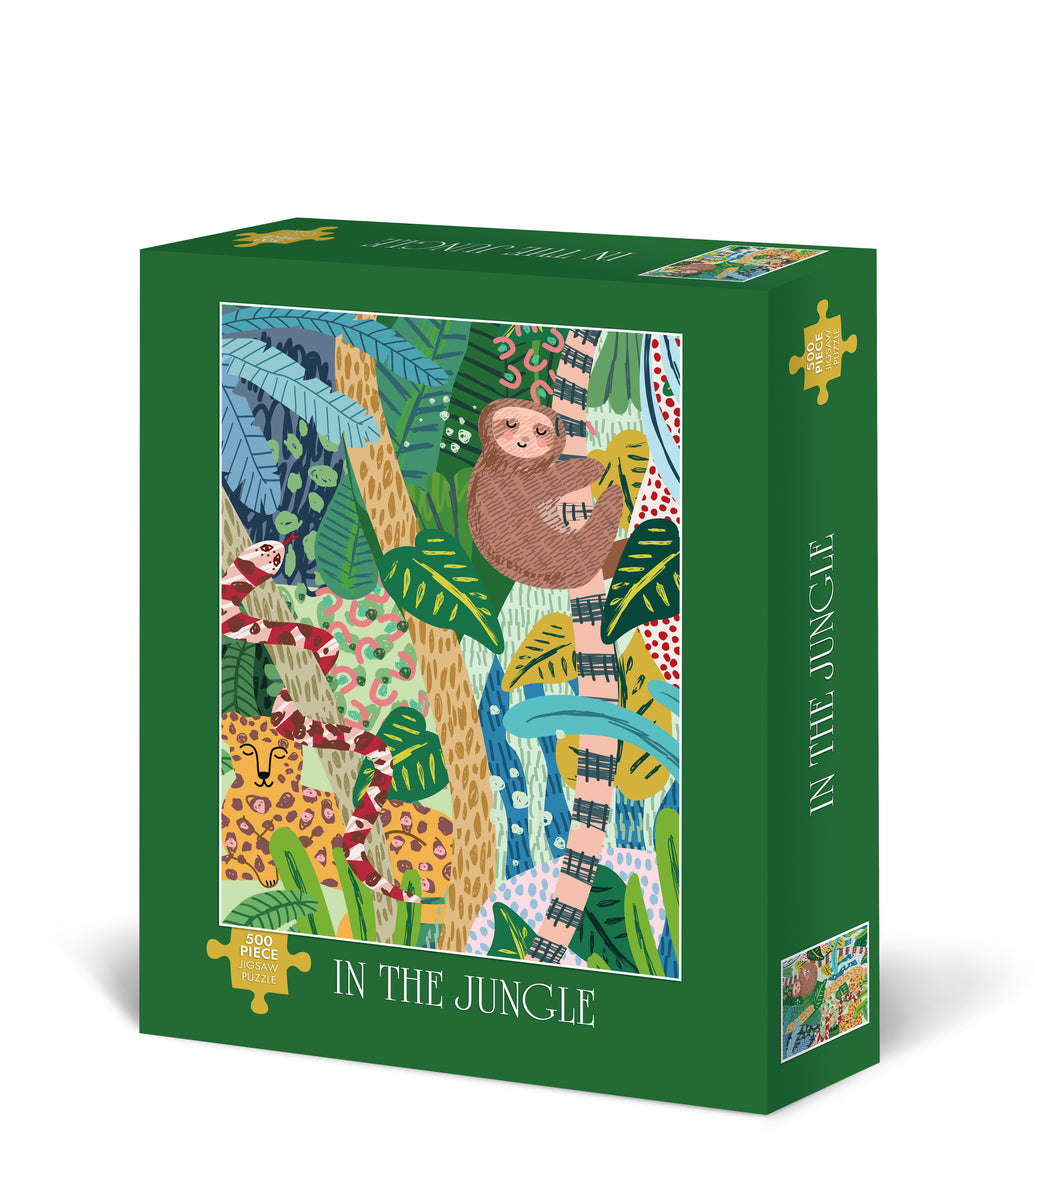 Amazing Nature Jungle Discovery 500 Piece Jigsaw Puzzle